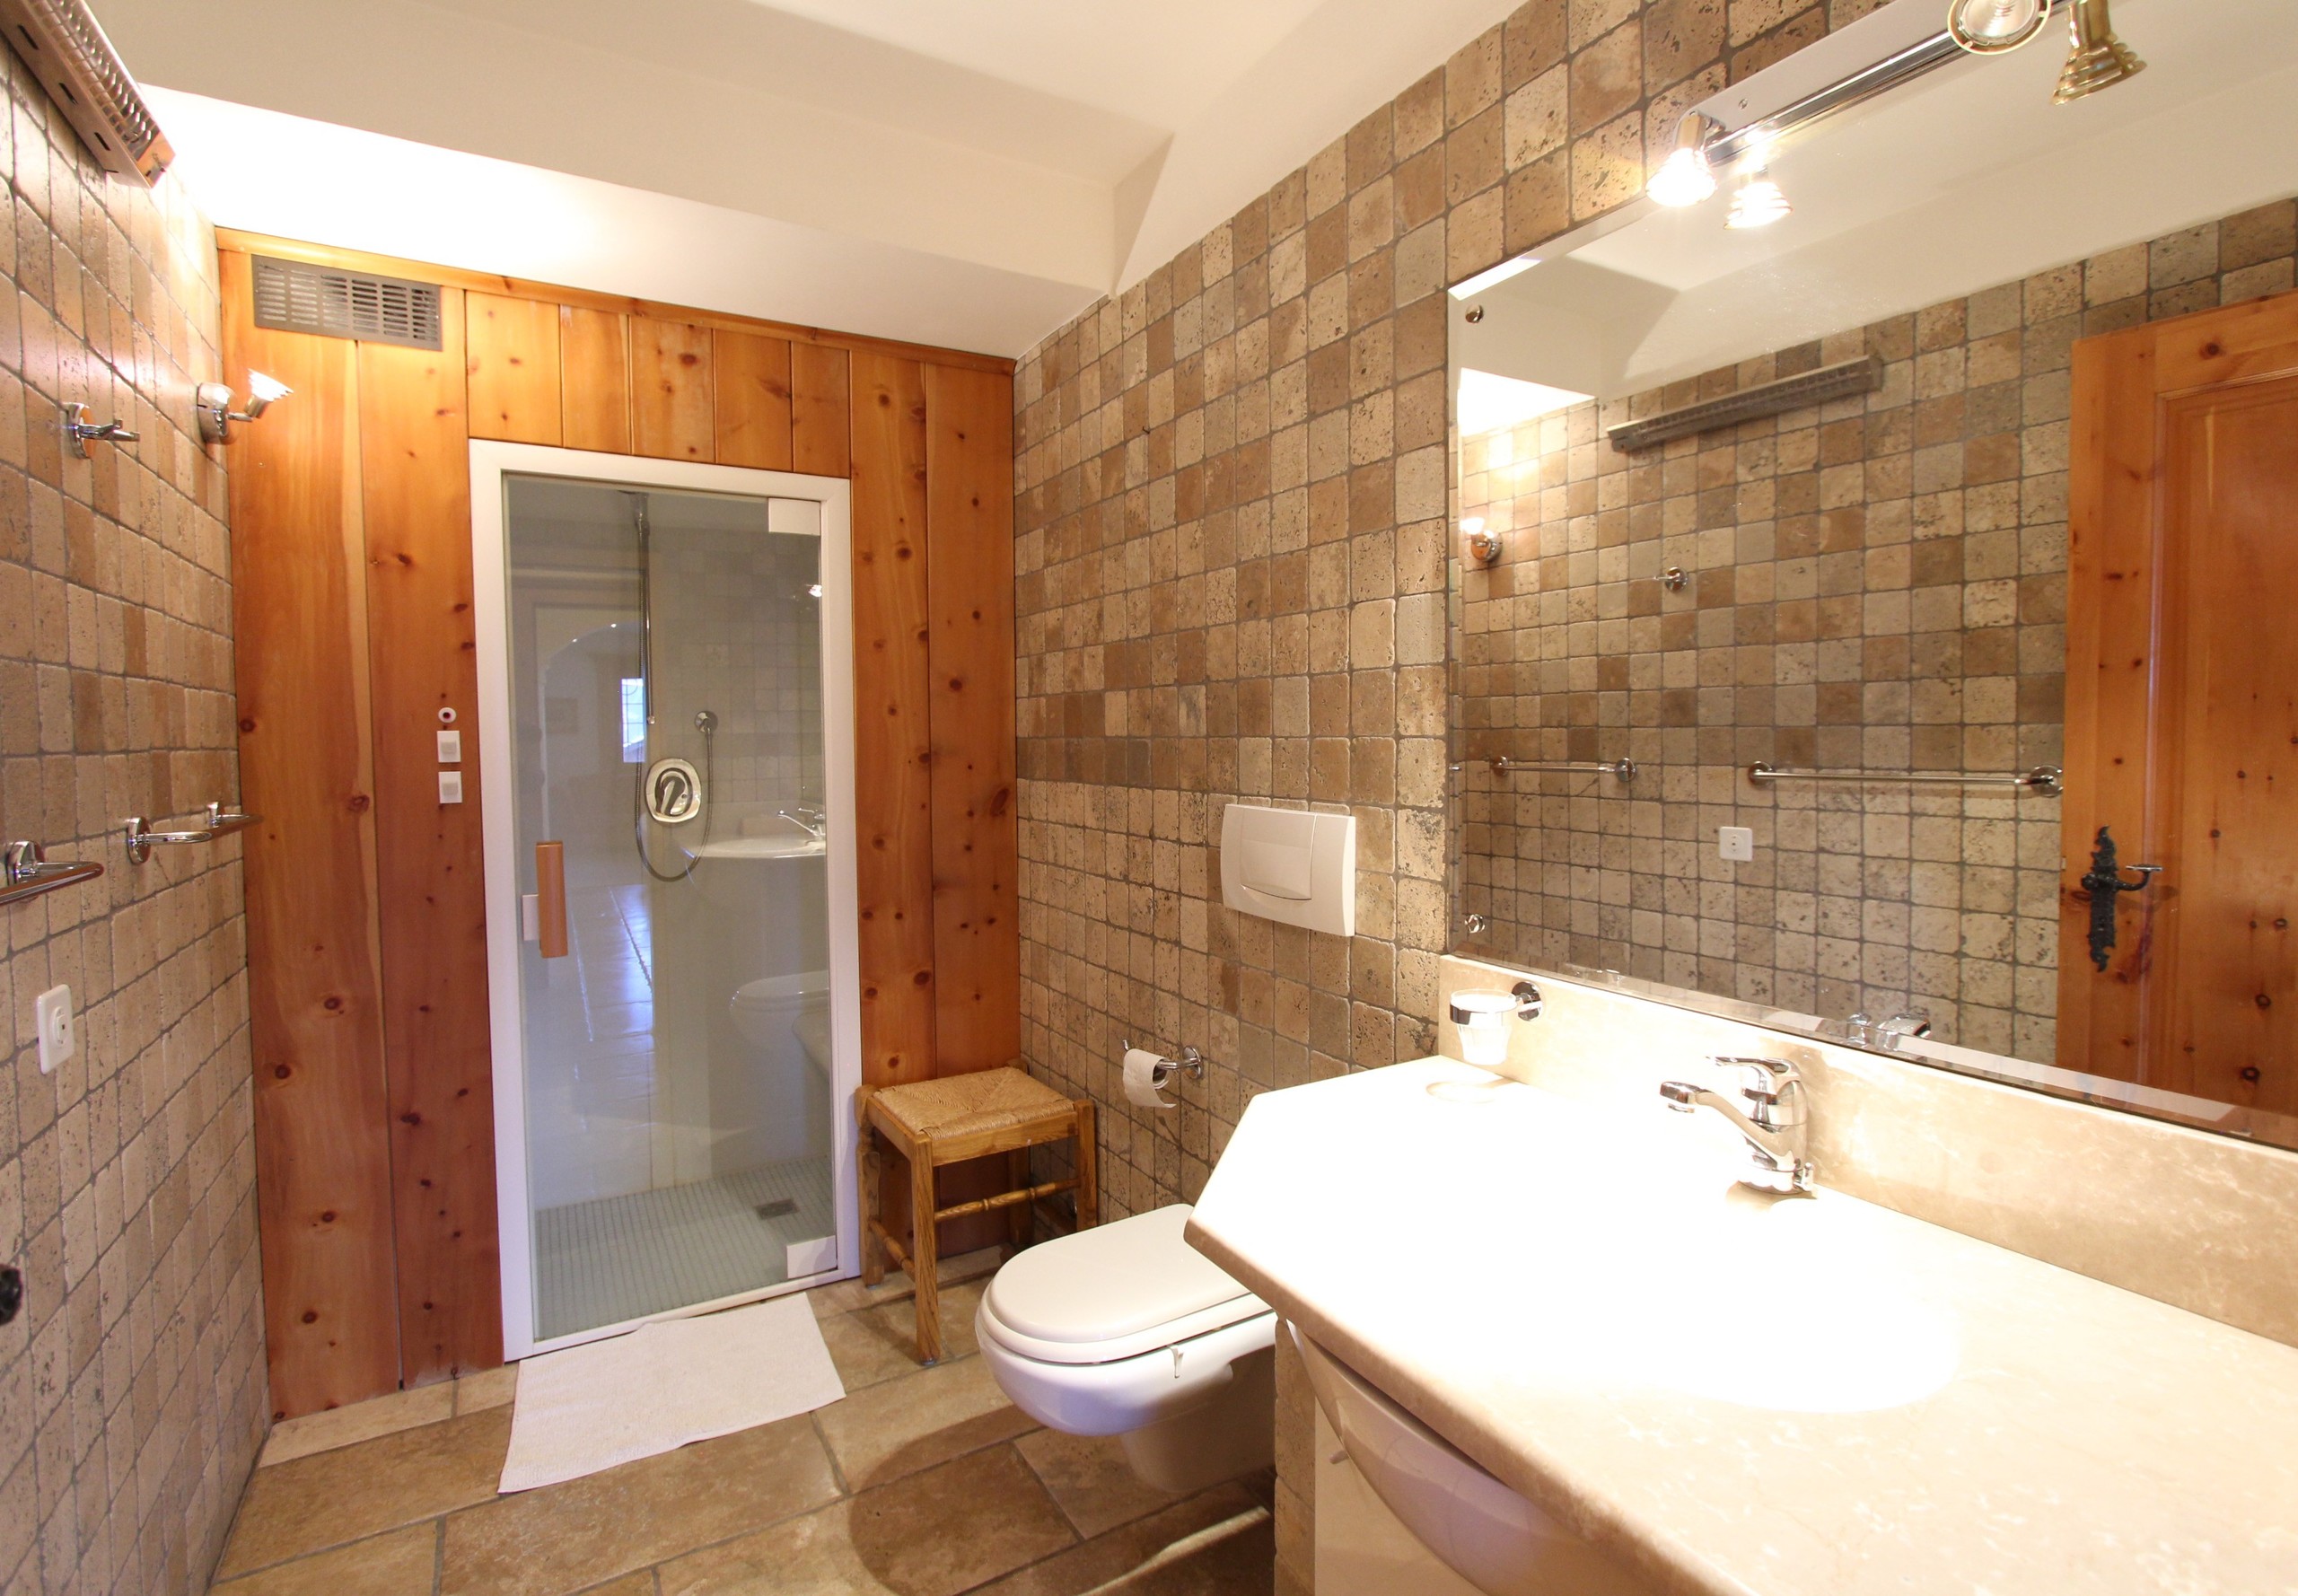 Ground Floor / Bathroom with hammam, sink and toilet